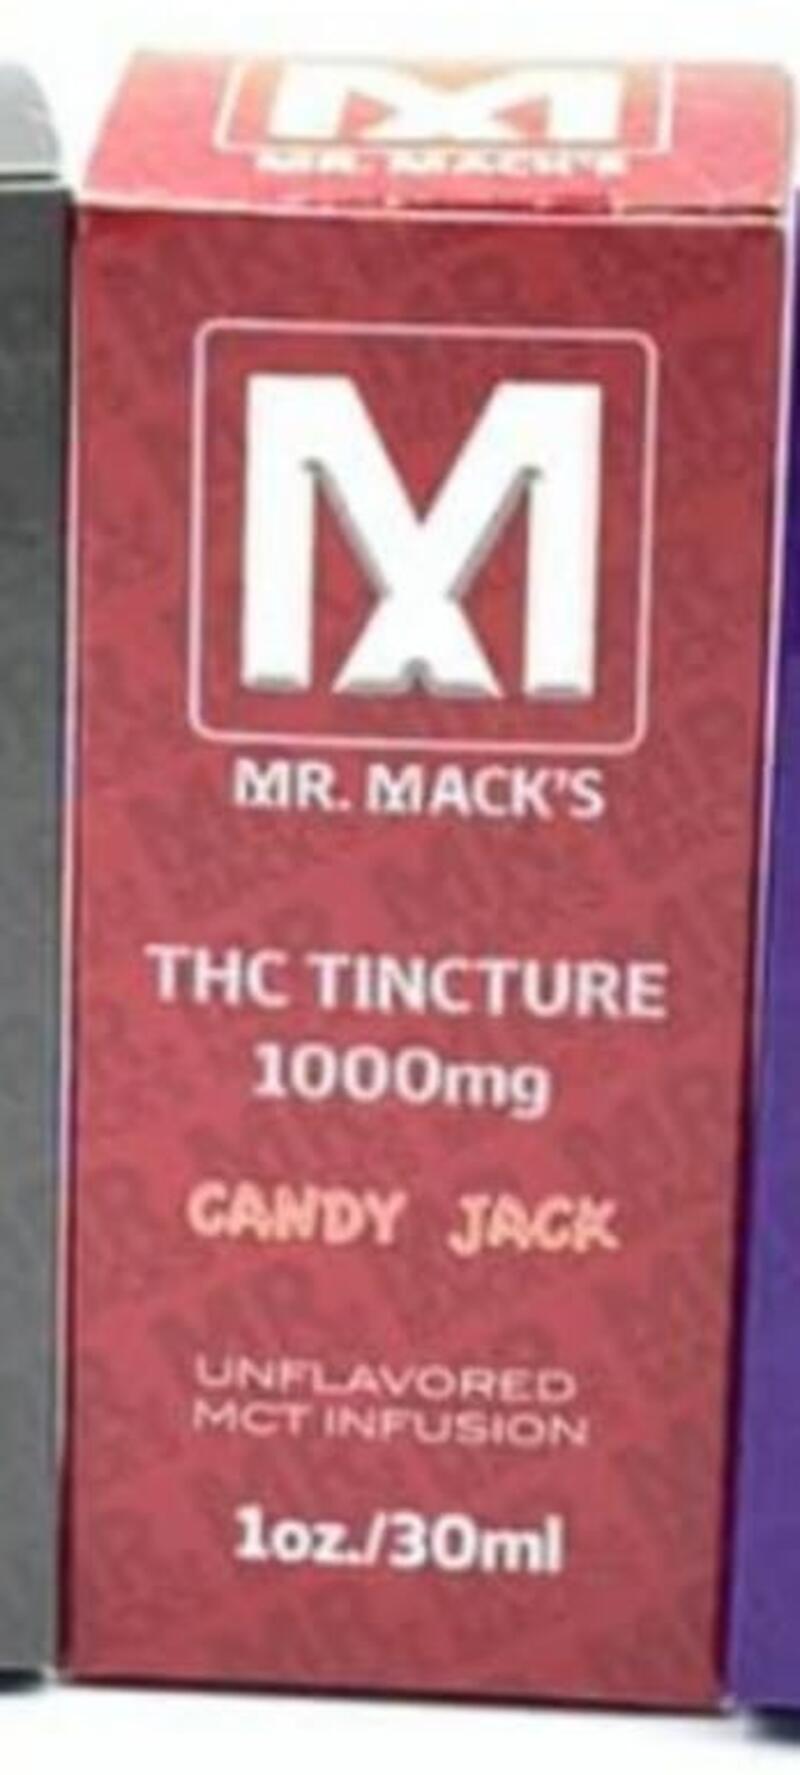 Mr. Mack's Tincture Candy Jack 1000mg